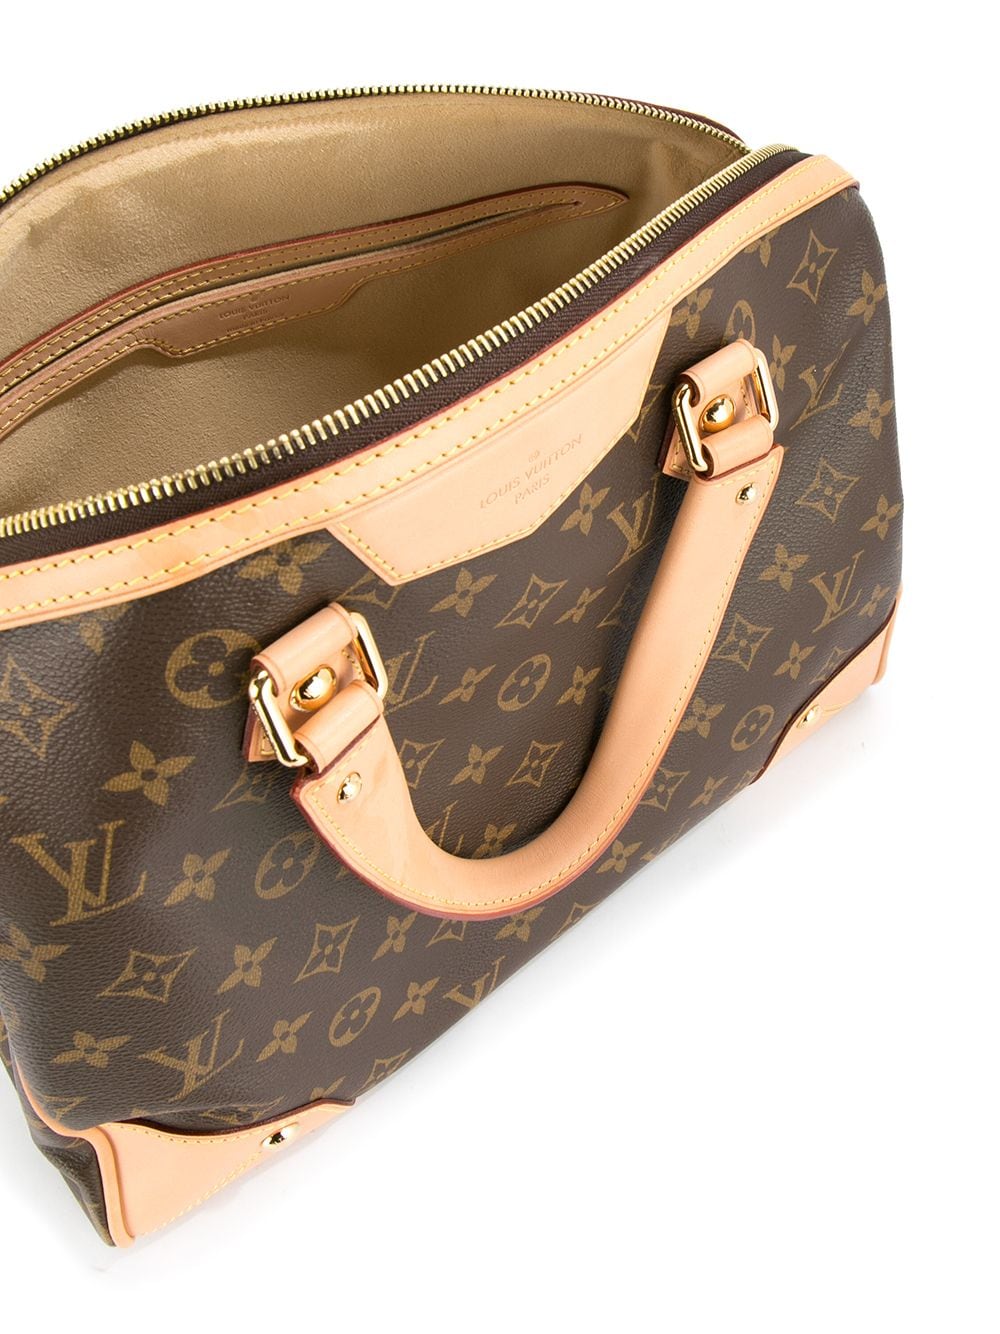 Louis Vuitton, Bags, Louis Vuitton Retiro Pm Brown Monogram Bag